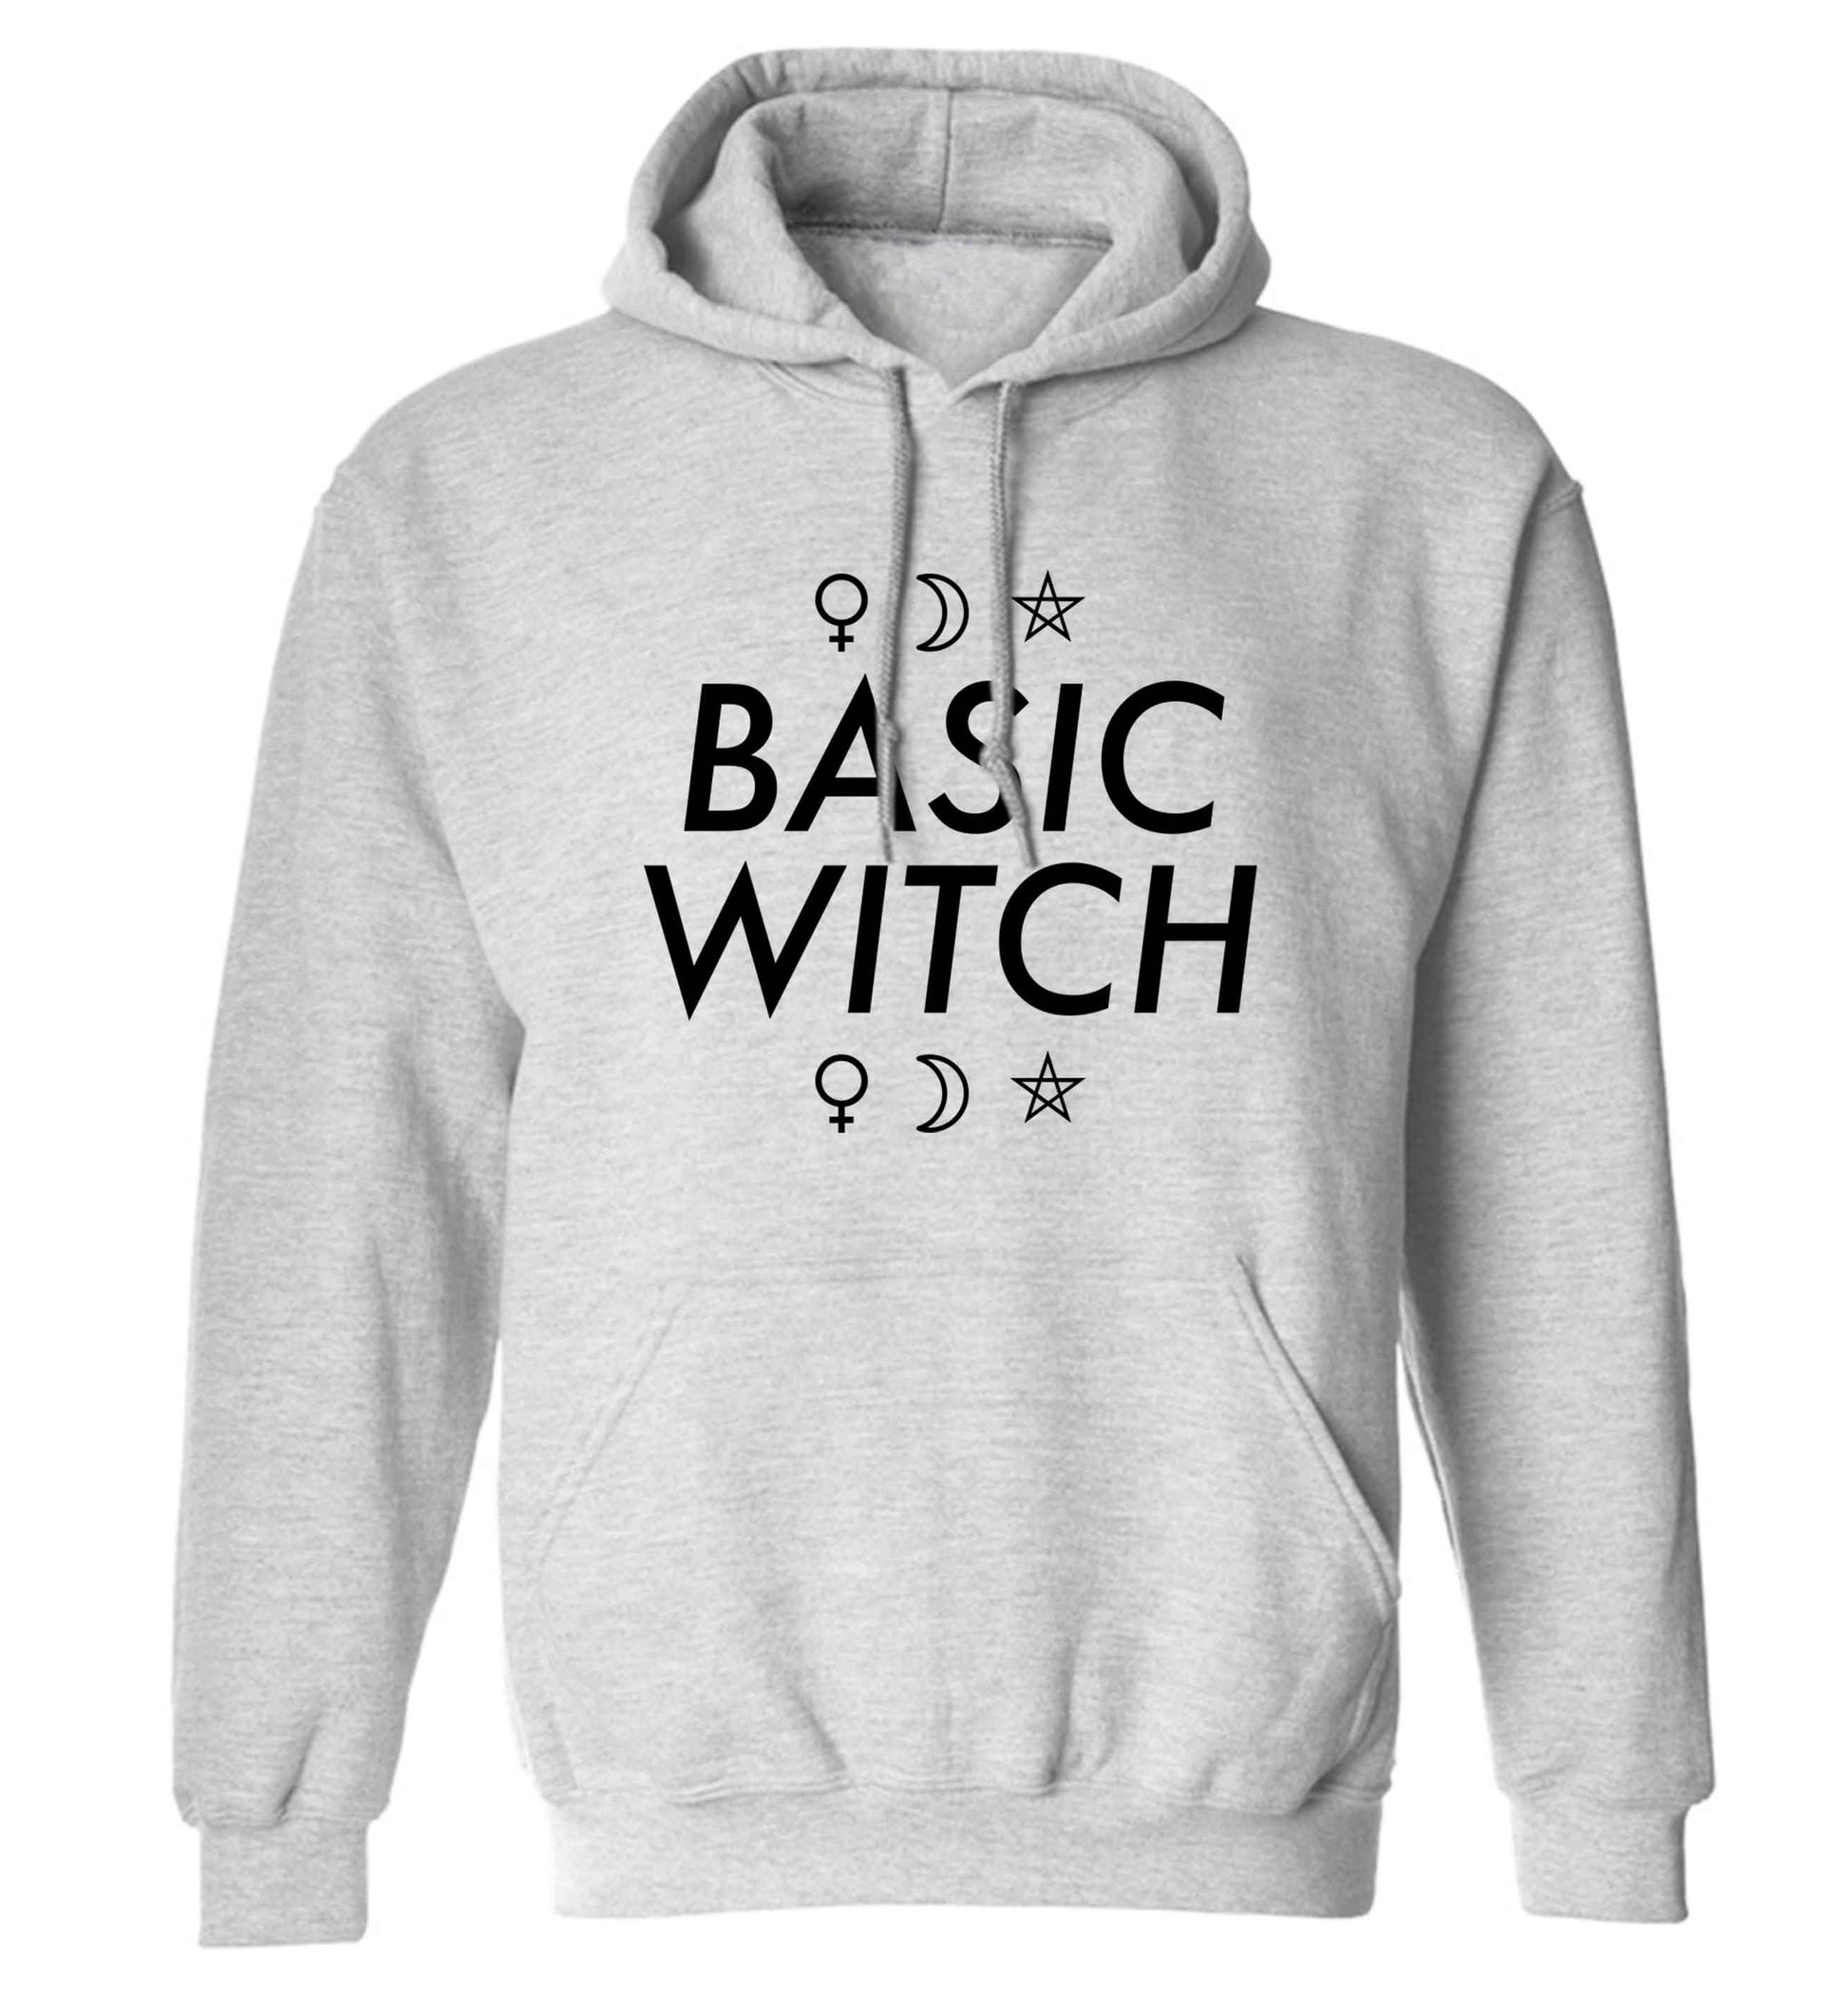 Basic witch 1 adults unisex grey hoodie 2XL